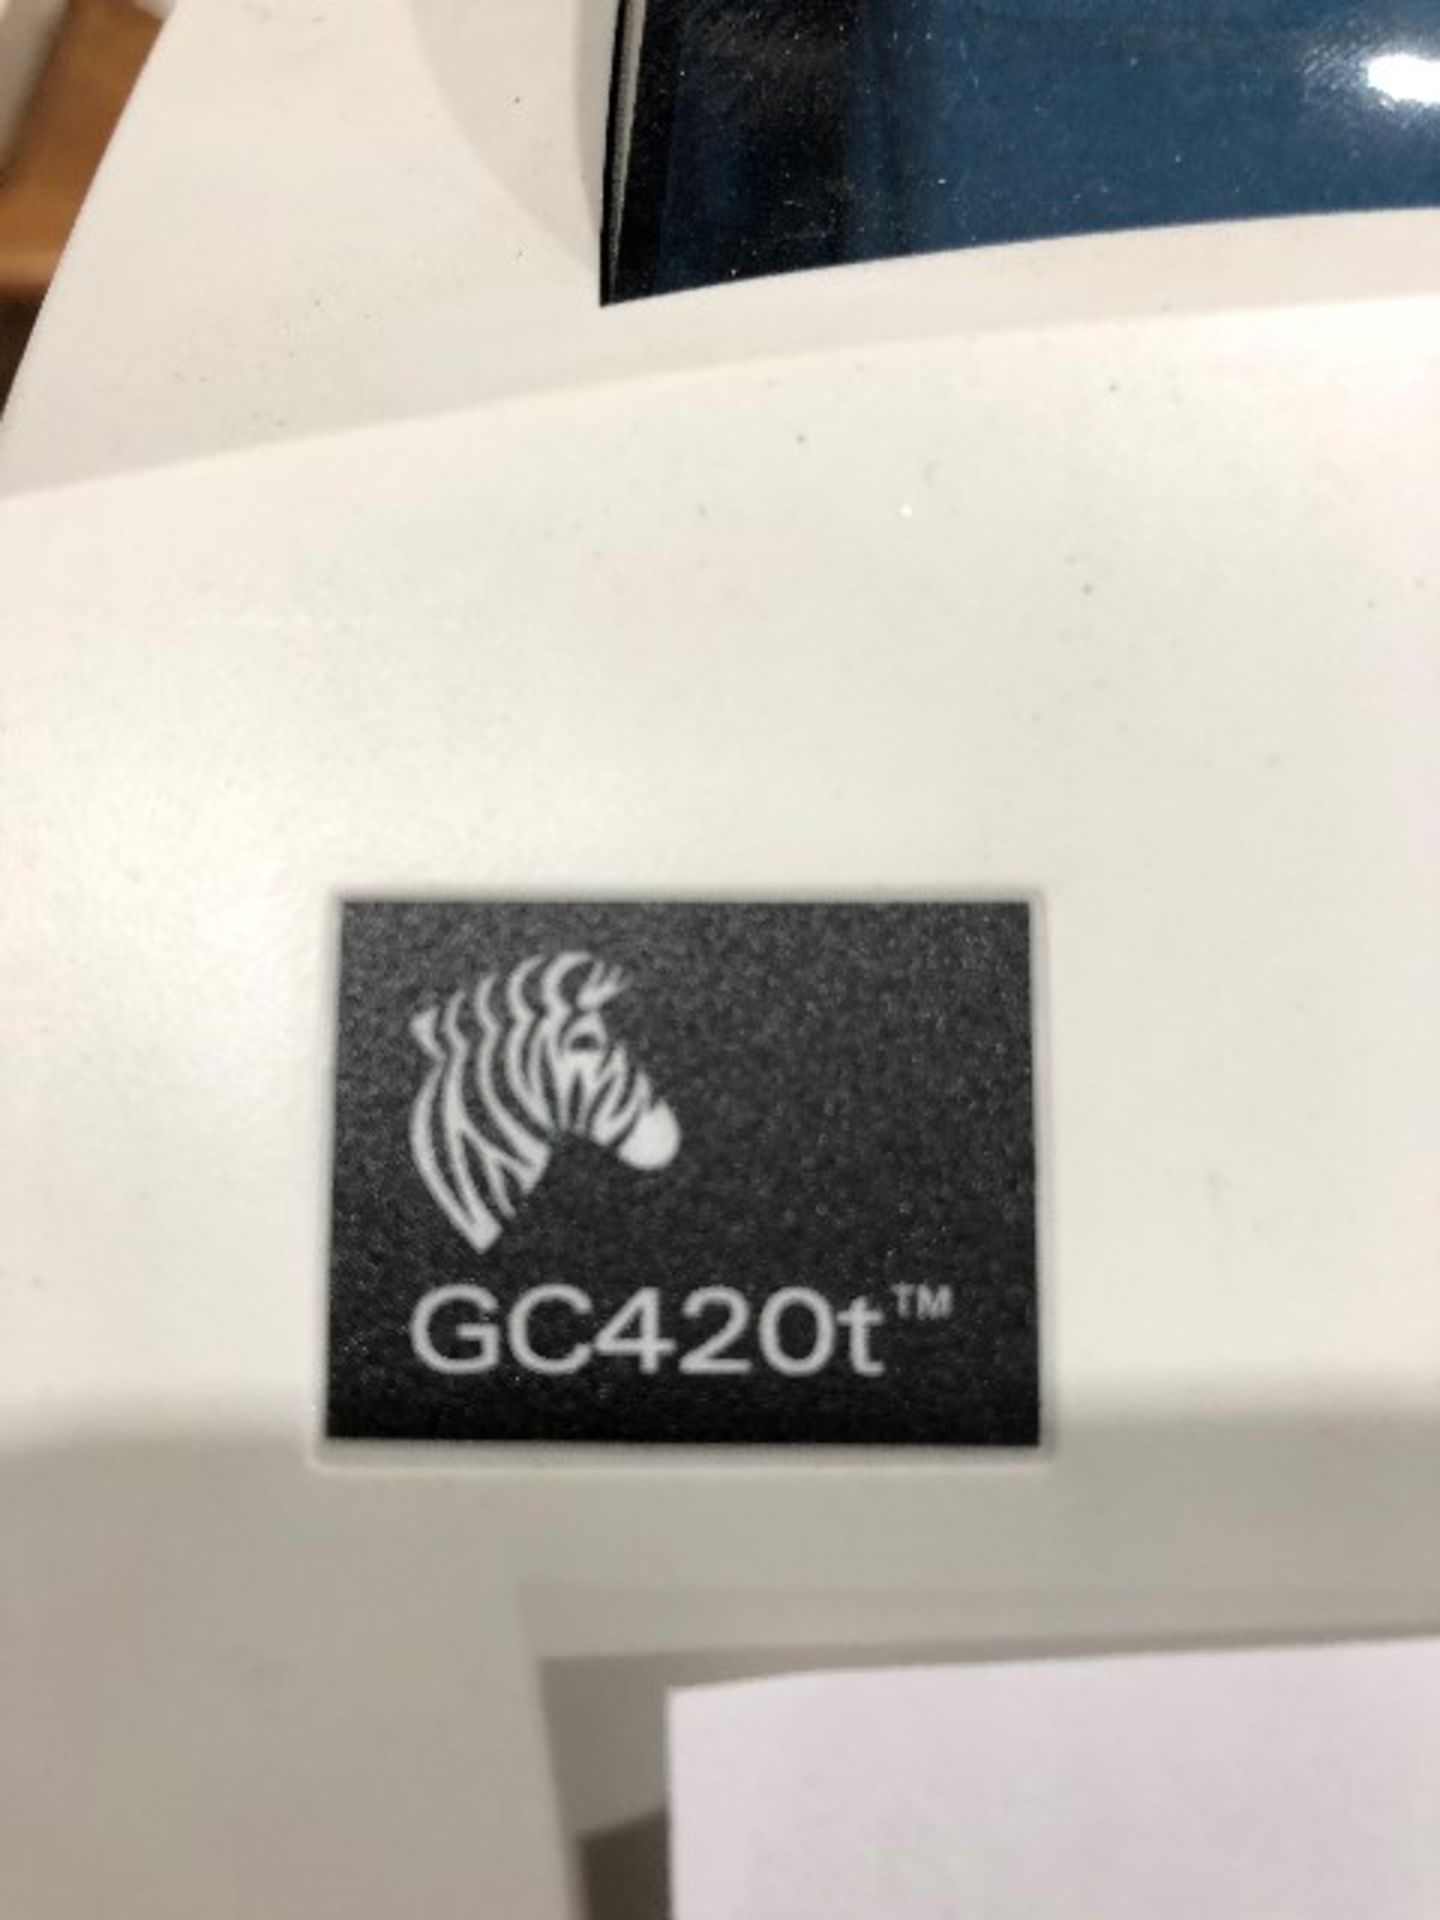 Zebra GC420t thermal printer - Image 2 of 2